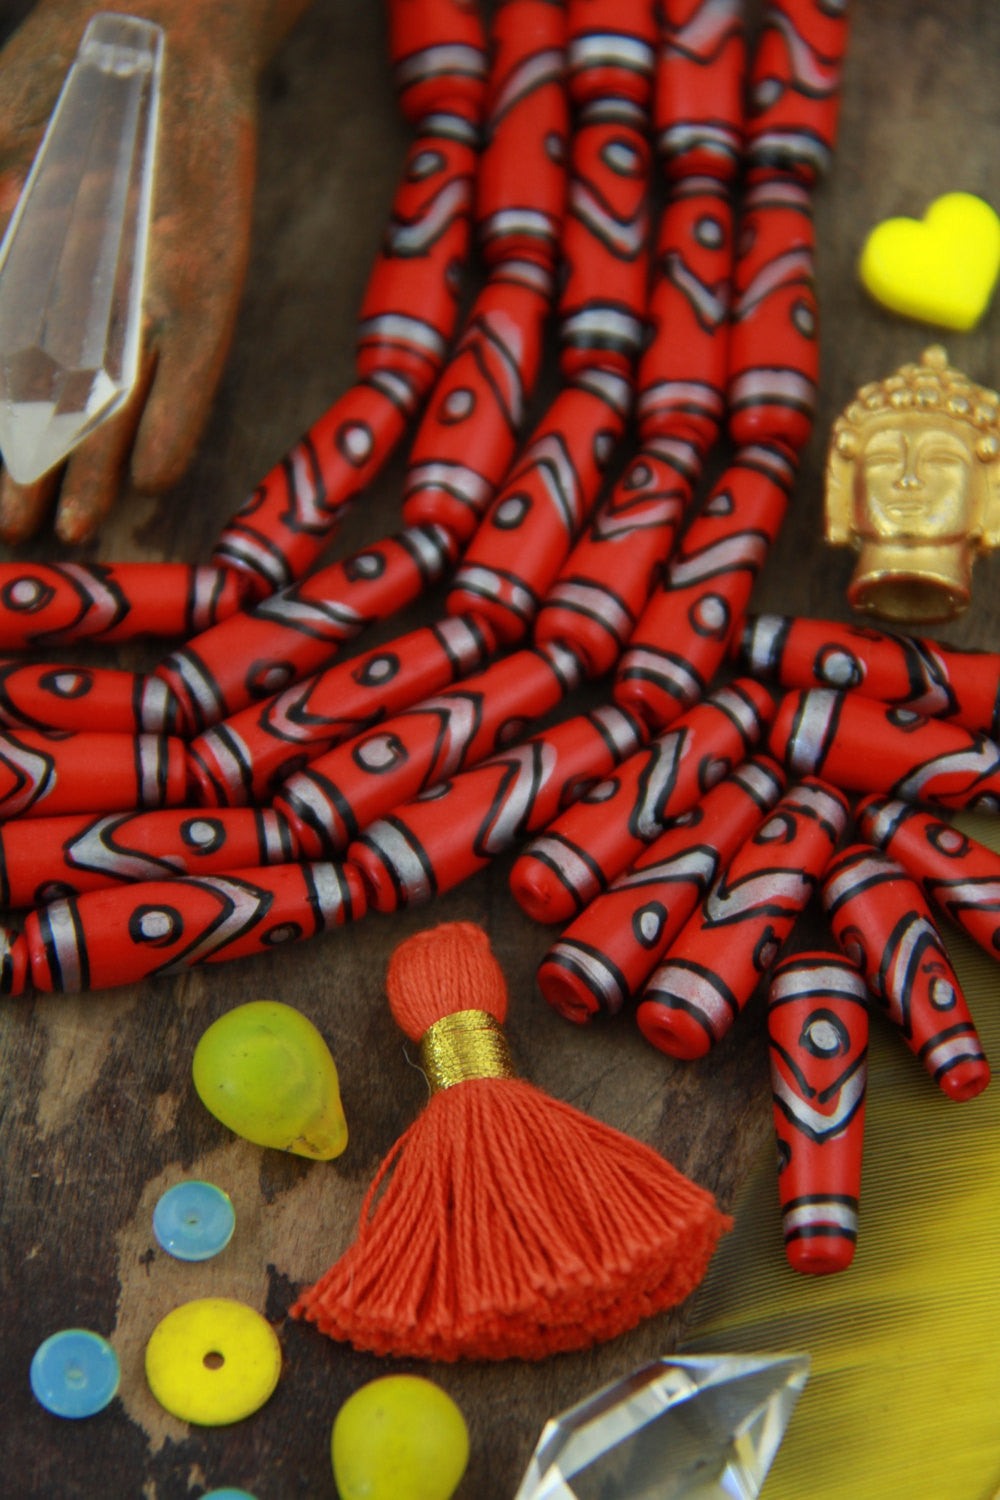 Fiery Red Black Silver Teardrop Tube : Large Hole Hand Painted Bone Beads, 6x25mm, Bohemian Tribal Jewelry Making Supplies, Boho, 8 pcs - ShopWomanShopsWorld.com. Bone Beads, Tassels, Pom Poms, African Beads.